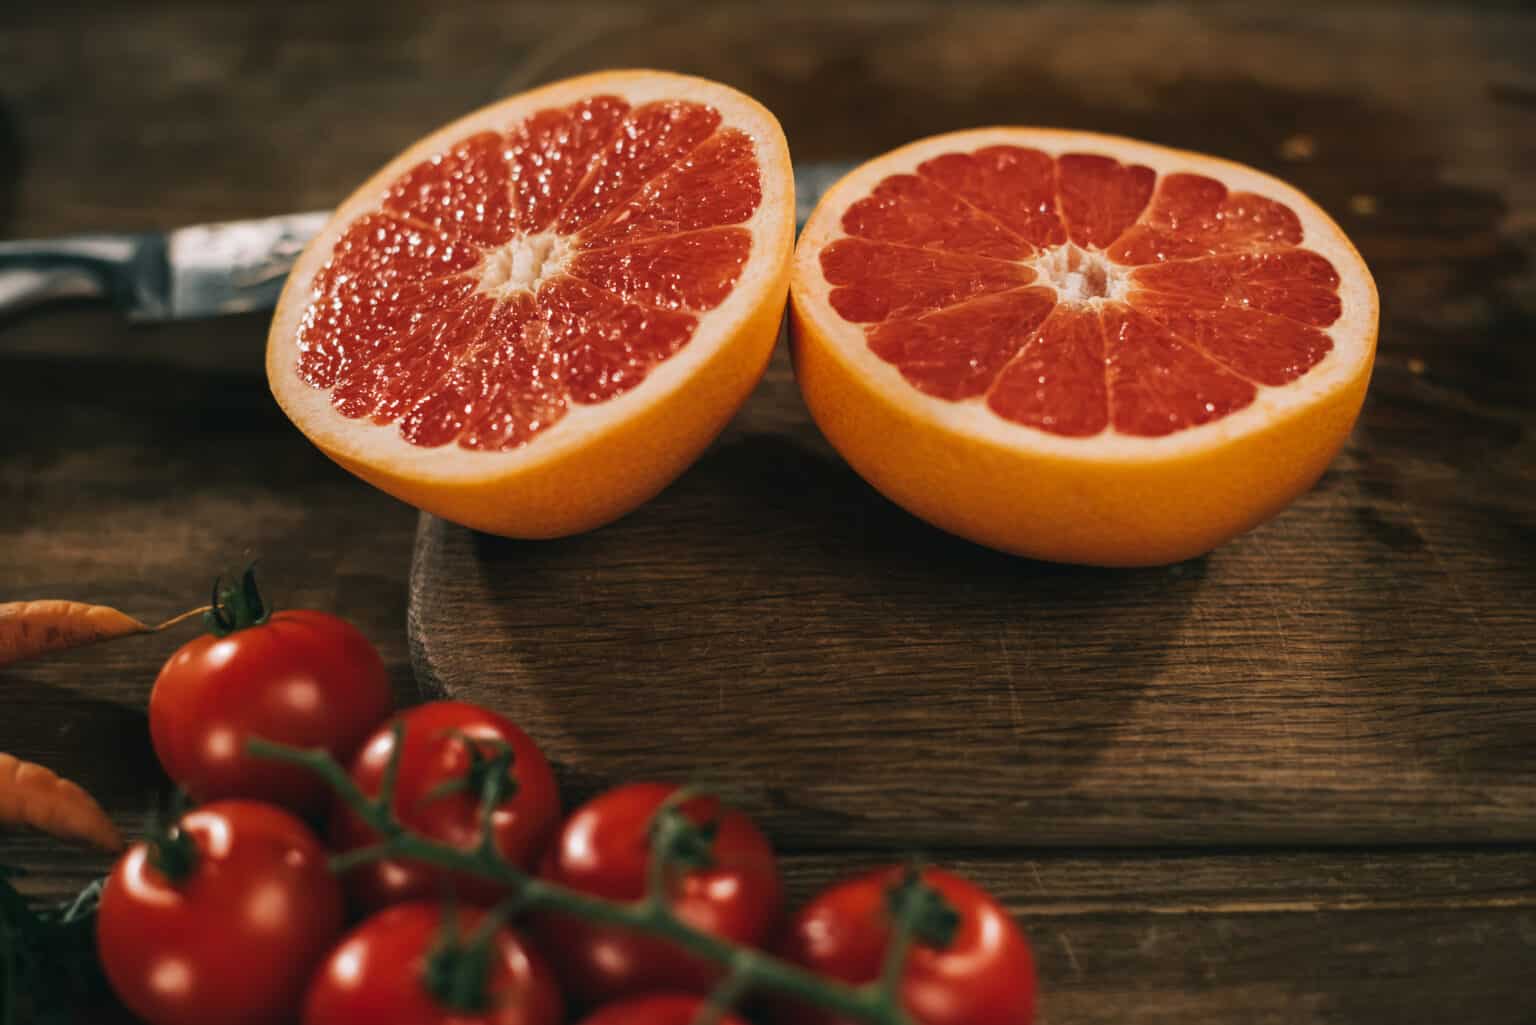 grapefruit carbs minus fiber